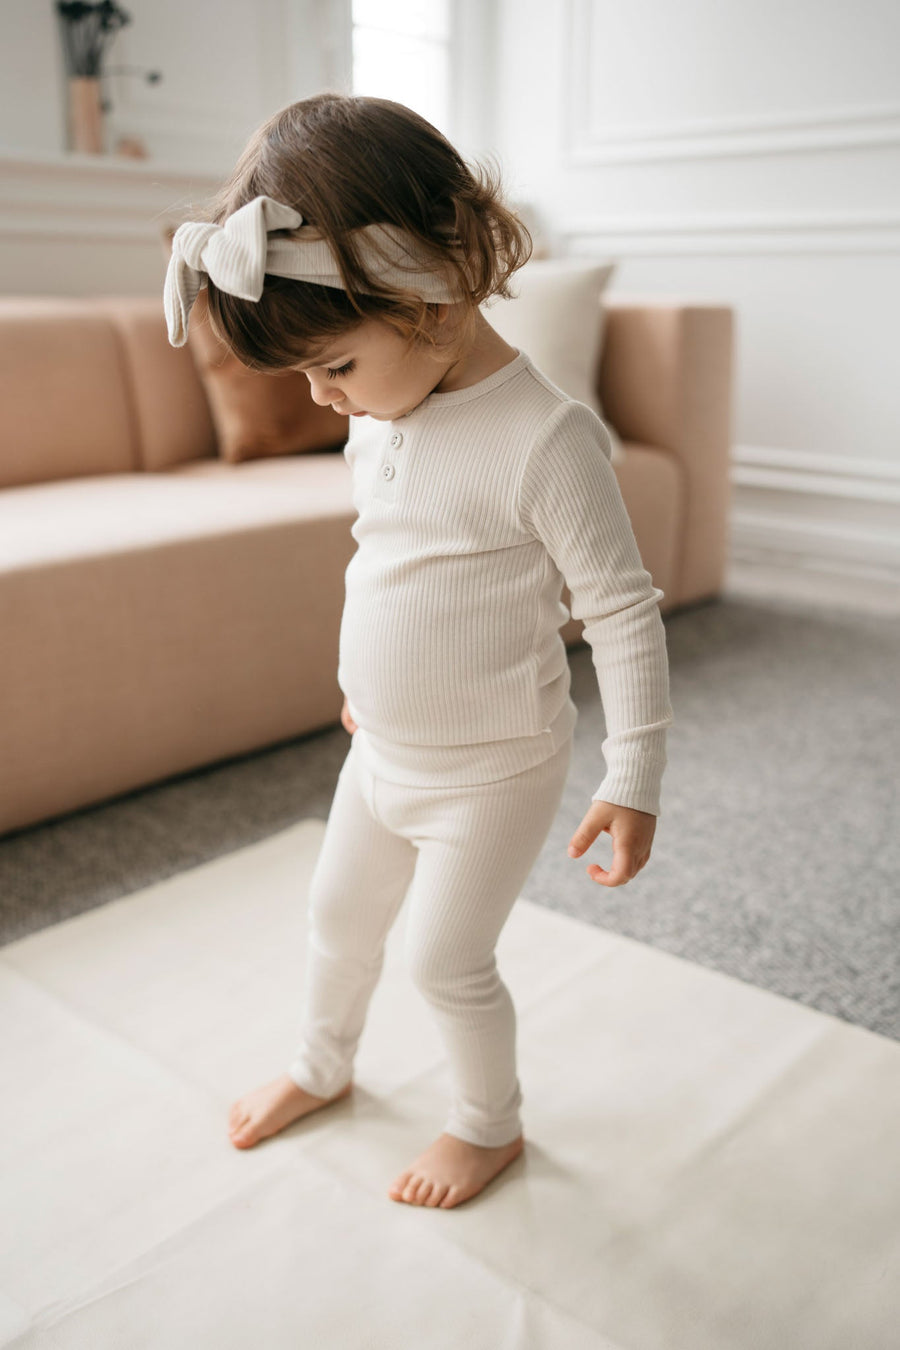 Organic Cotton Modal Long Sleeve Henley - Beech Childrens Top from Jamie Kay NZ